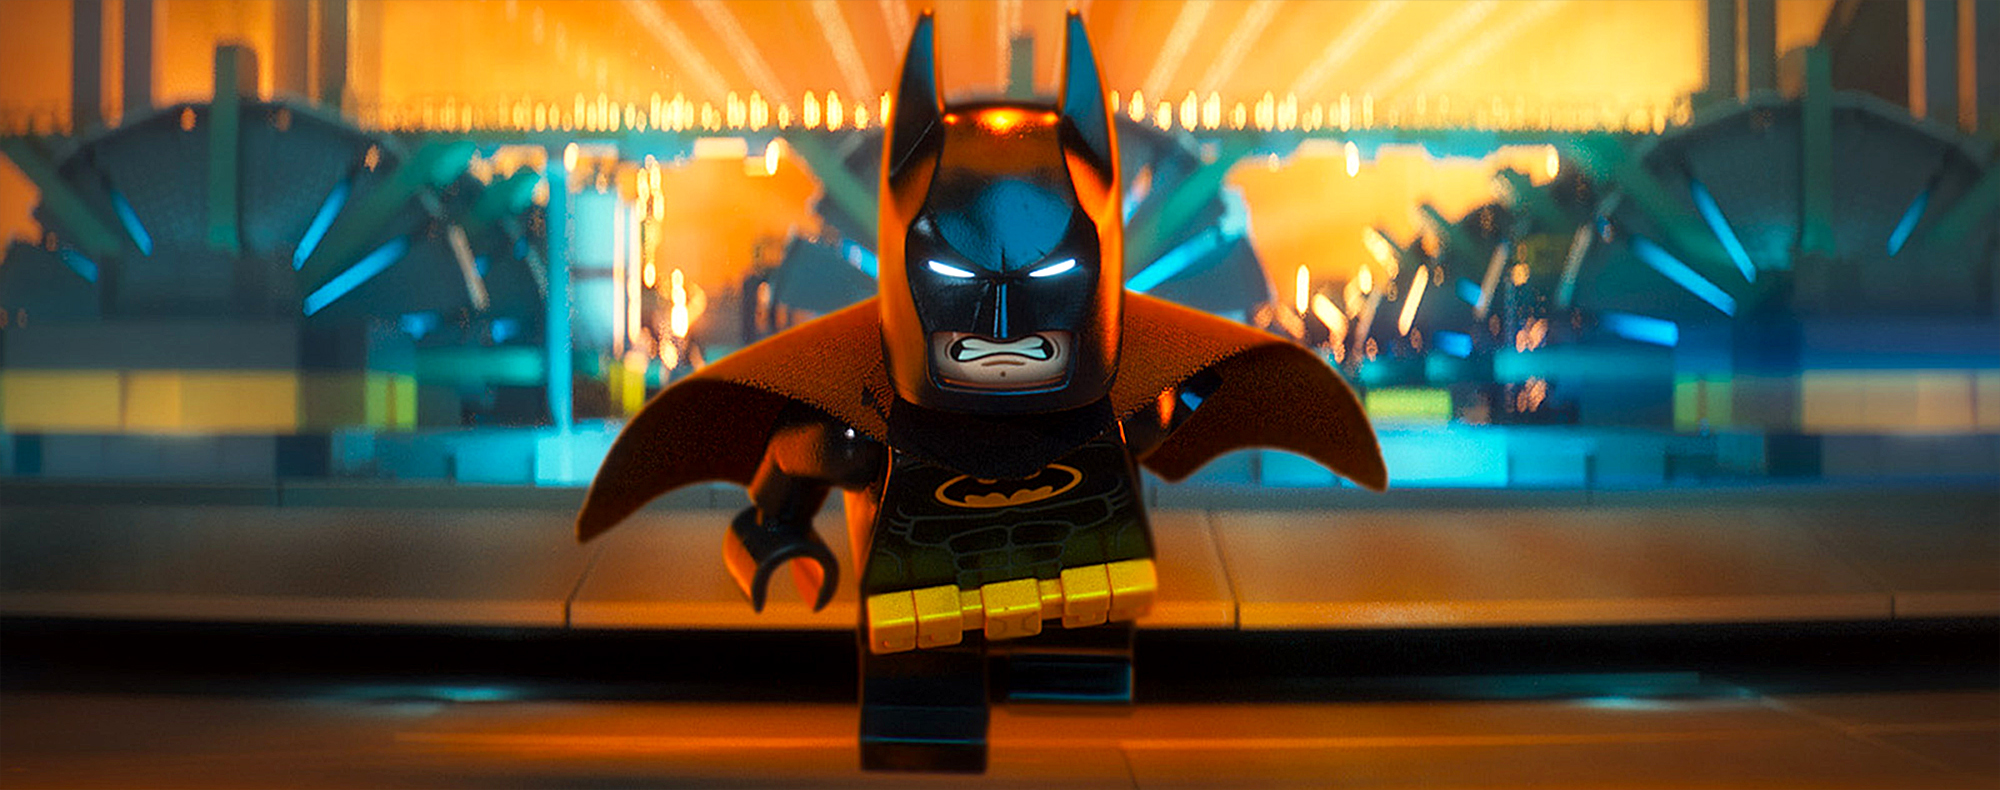 «Лего Фильм: Бэтмен»: доставайте «бэт-кредитки»